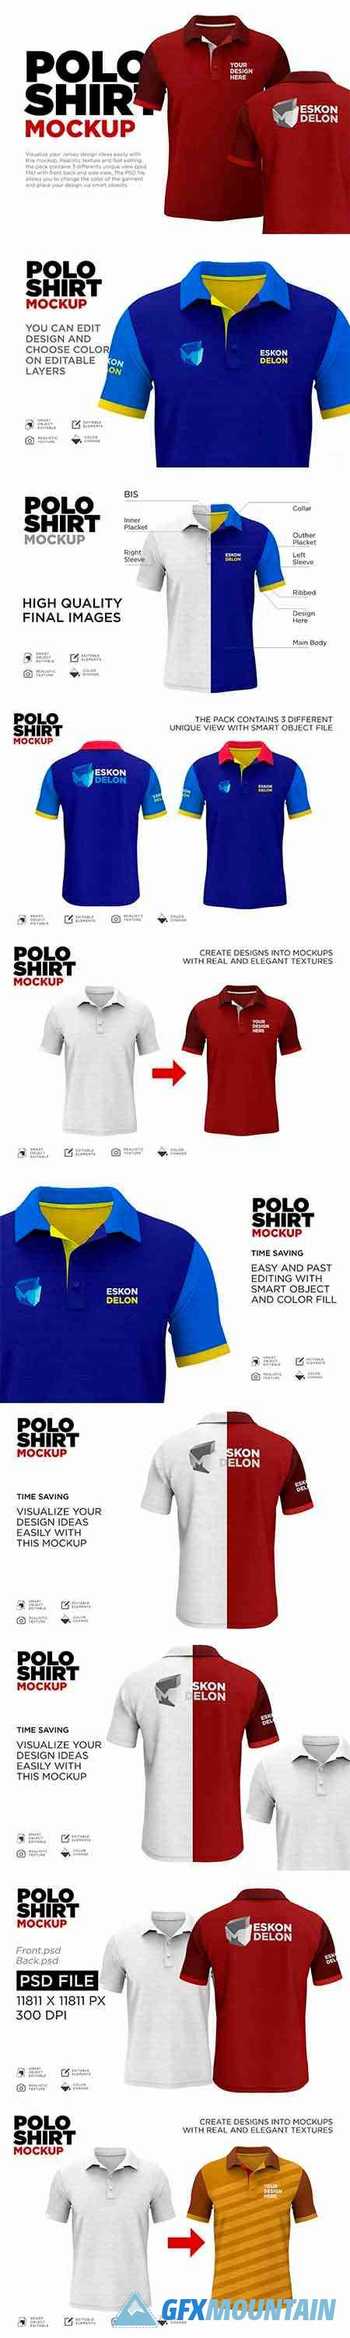 Polo Shirt Mockup Psd 5894833